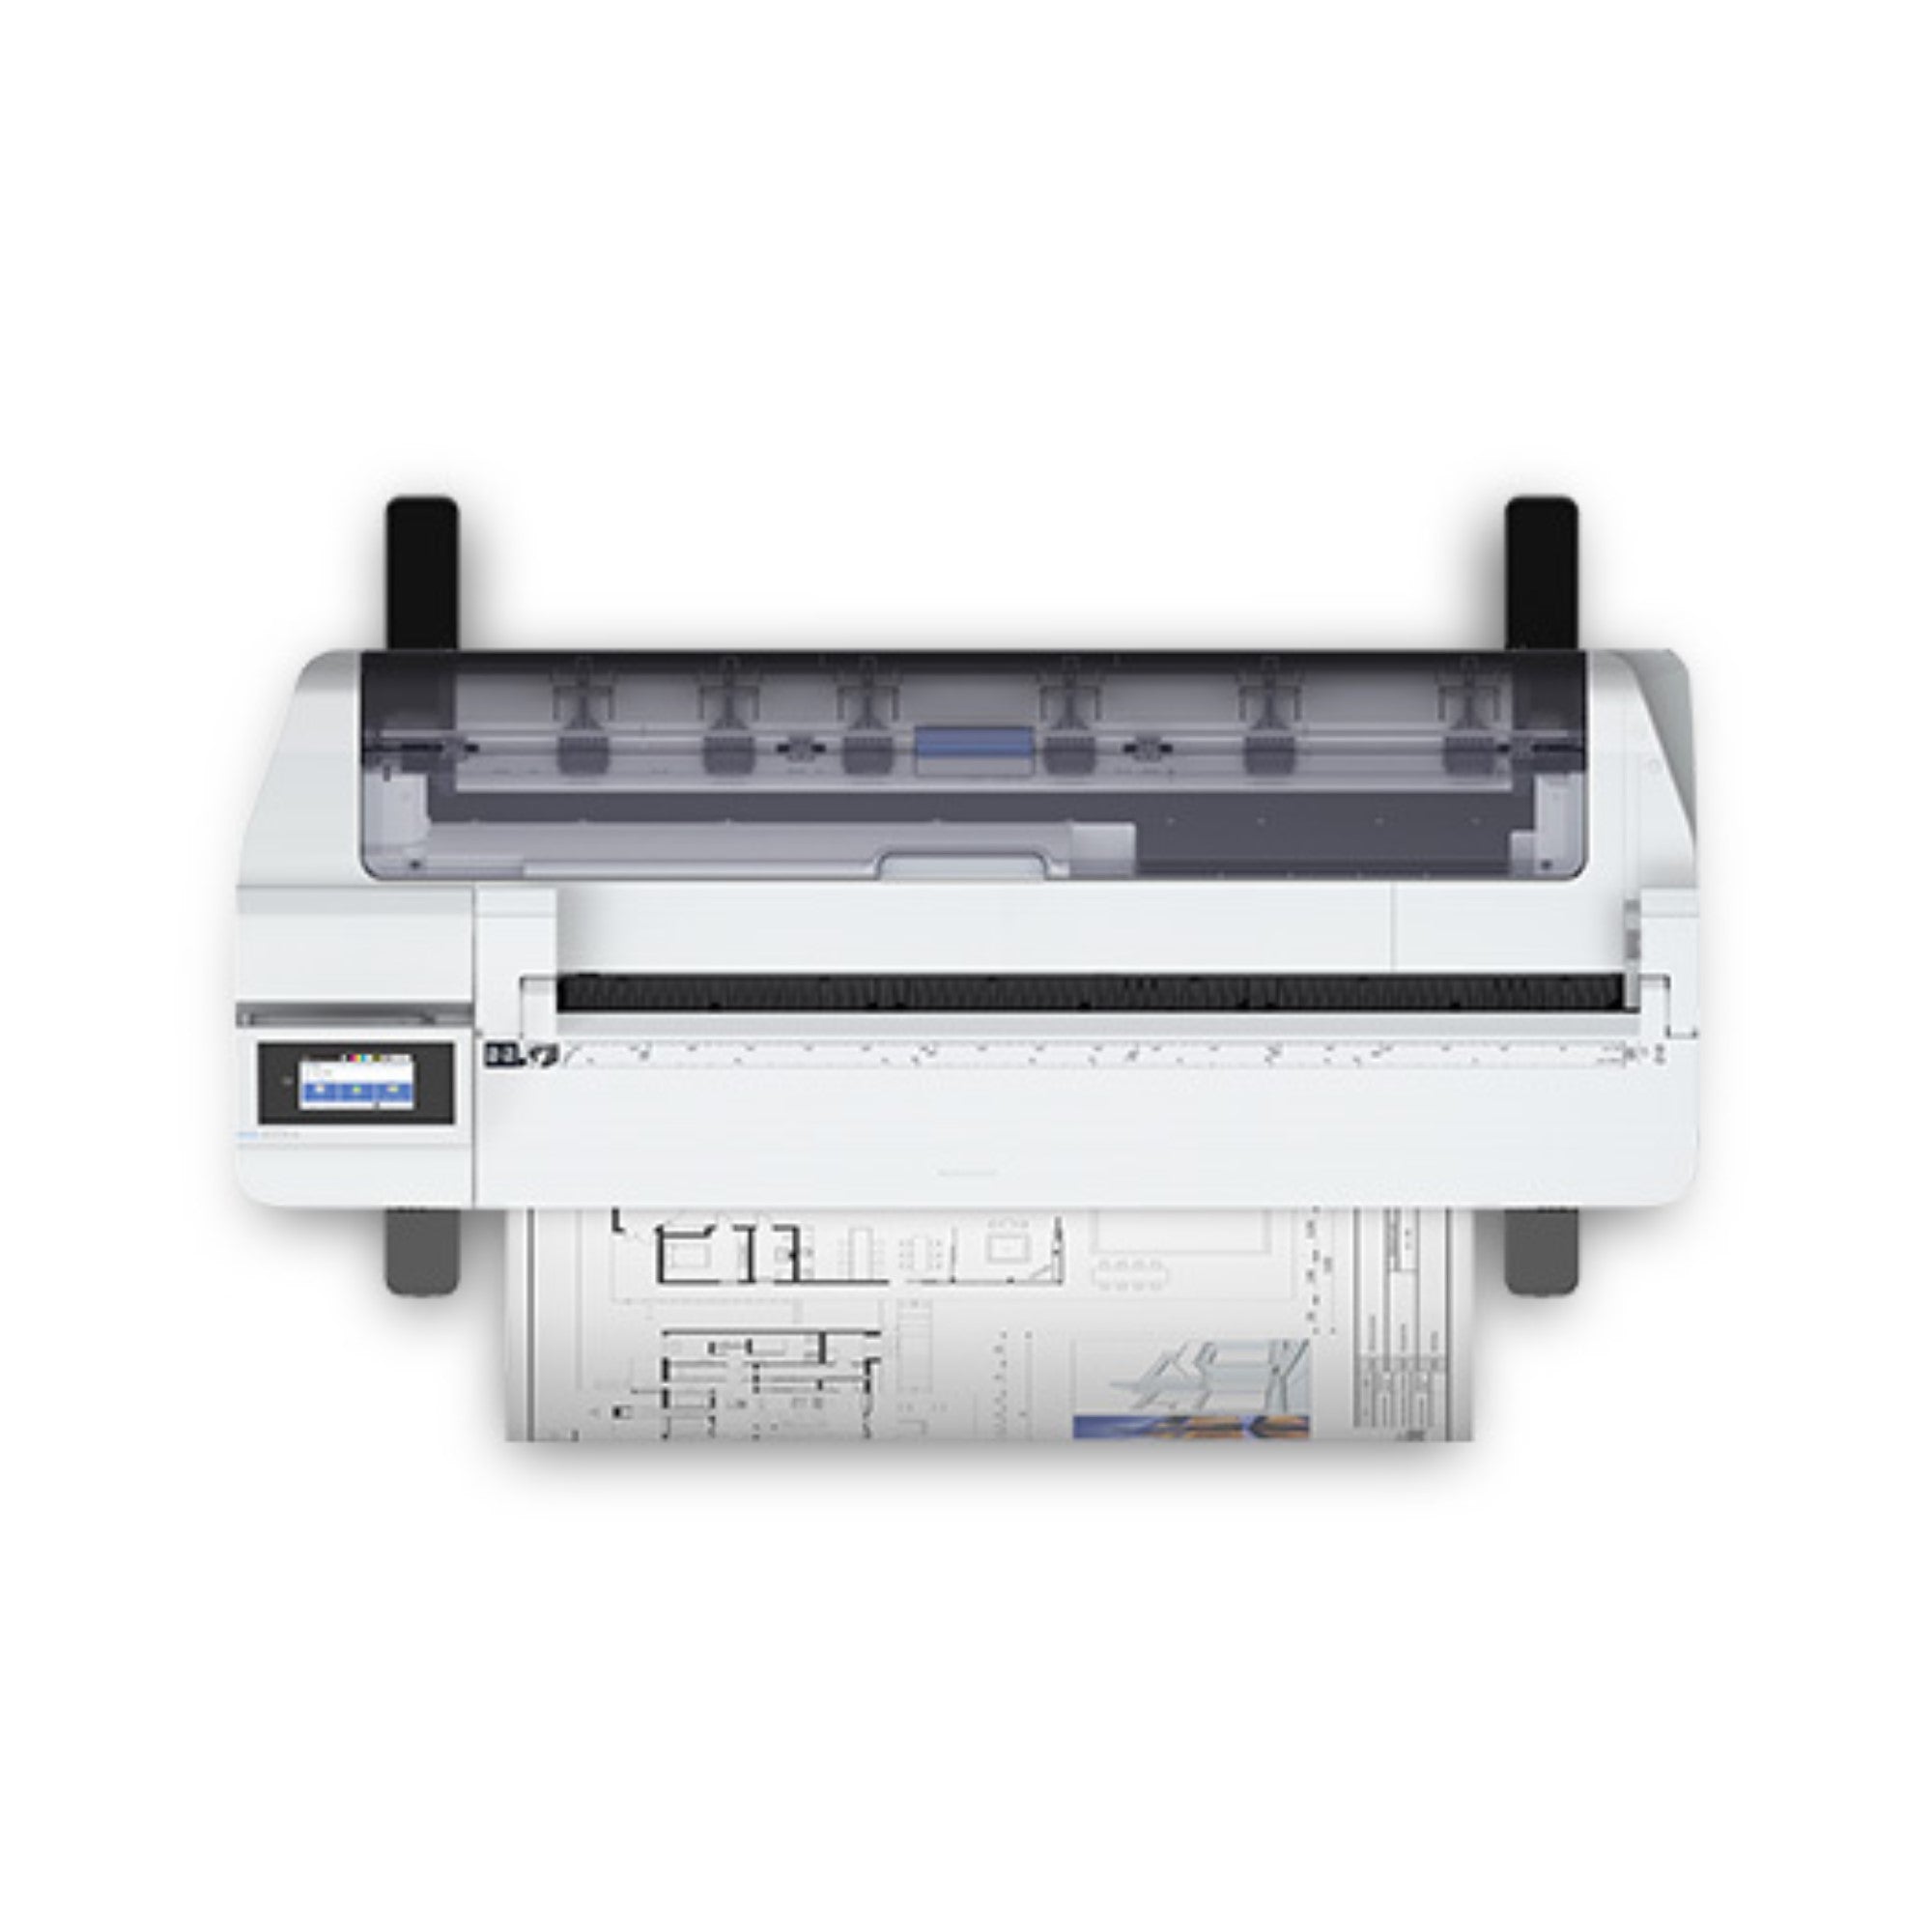 vaccination Stor eg samvittighed Epson T5170M Wireless Printers on Sale | Swing Design